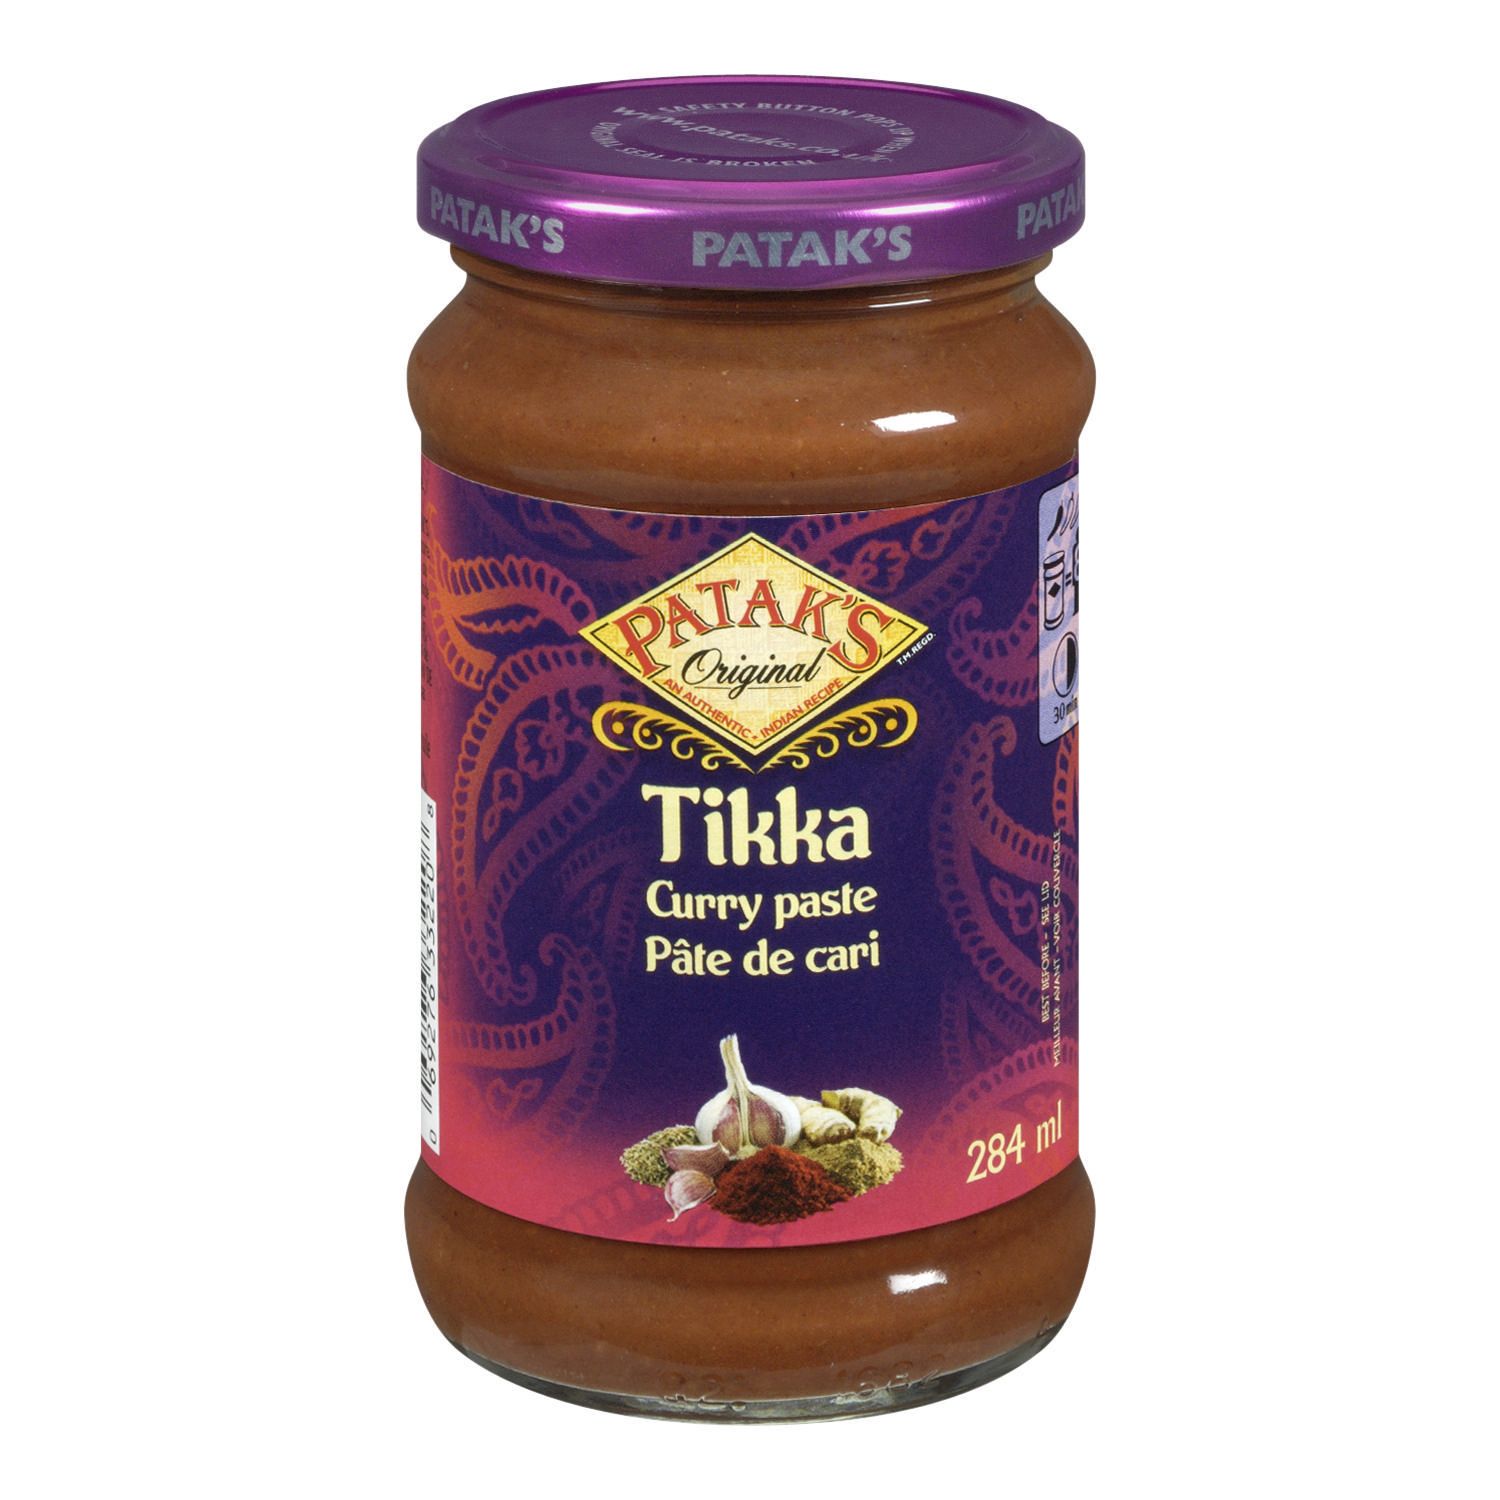 Pataks Original Tikka Curry Paste | Walmart Canada